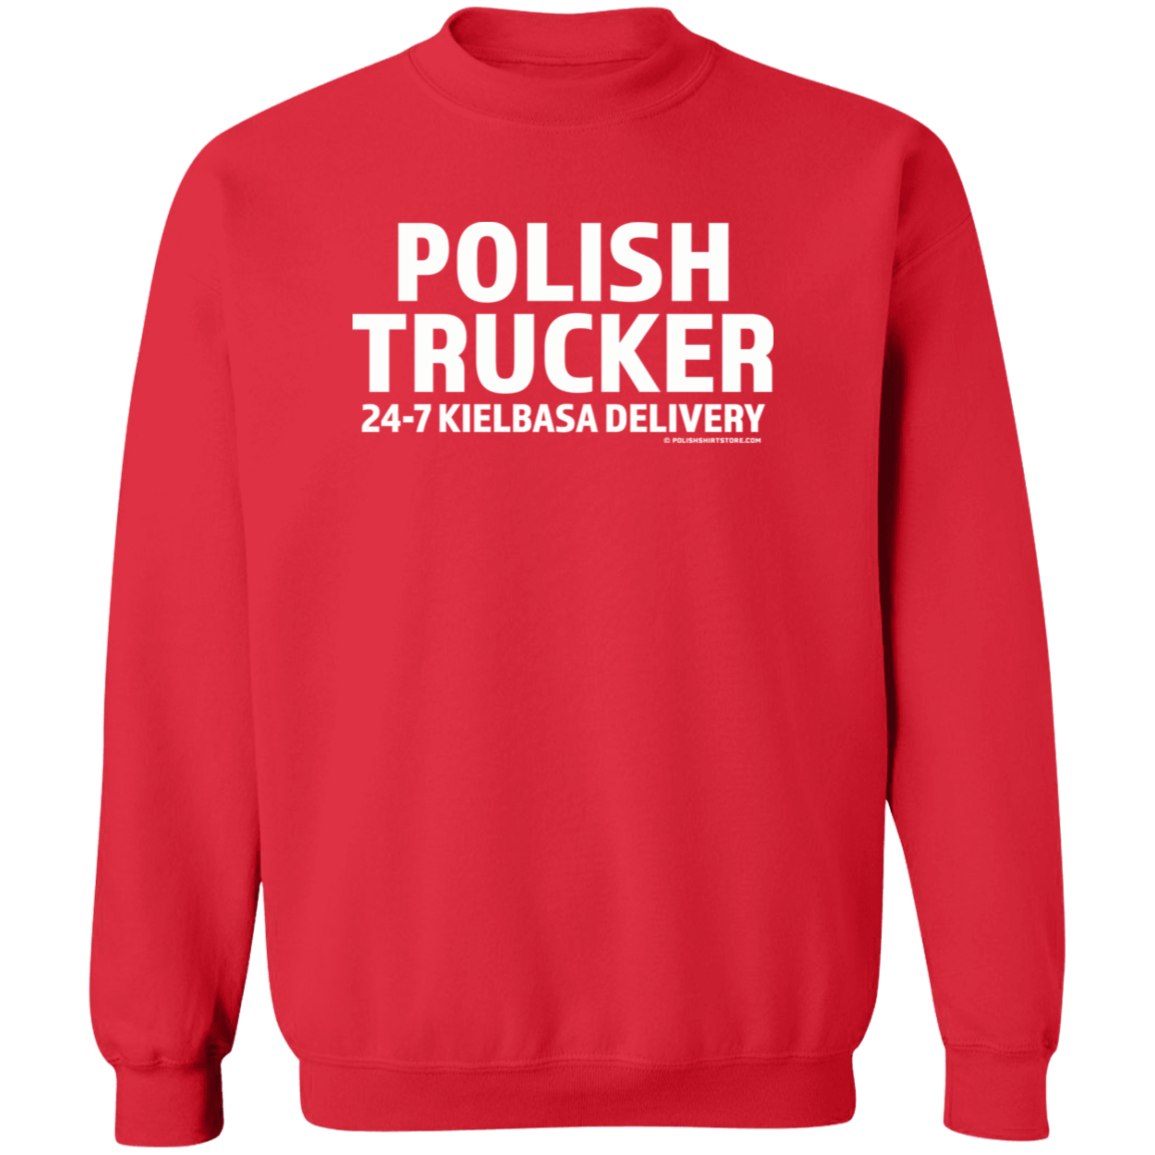 Polish Trucker 24-7 Kielbasa Delivery Apparel CustomCat G180 Crewneck Pullover Sweatshirt Red S